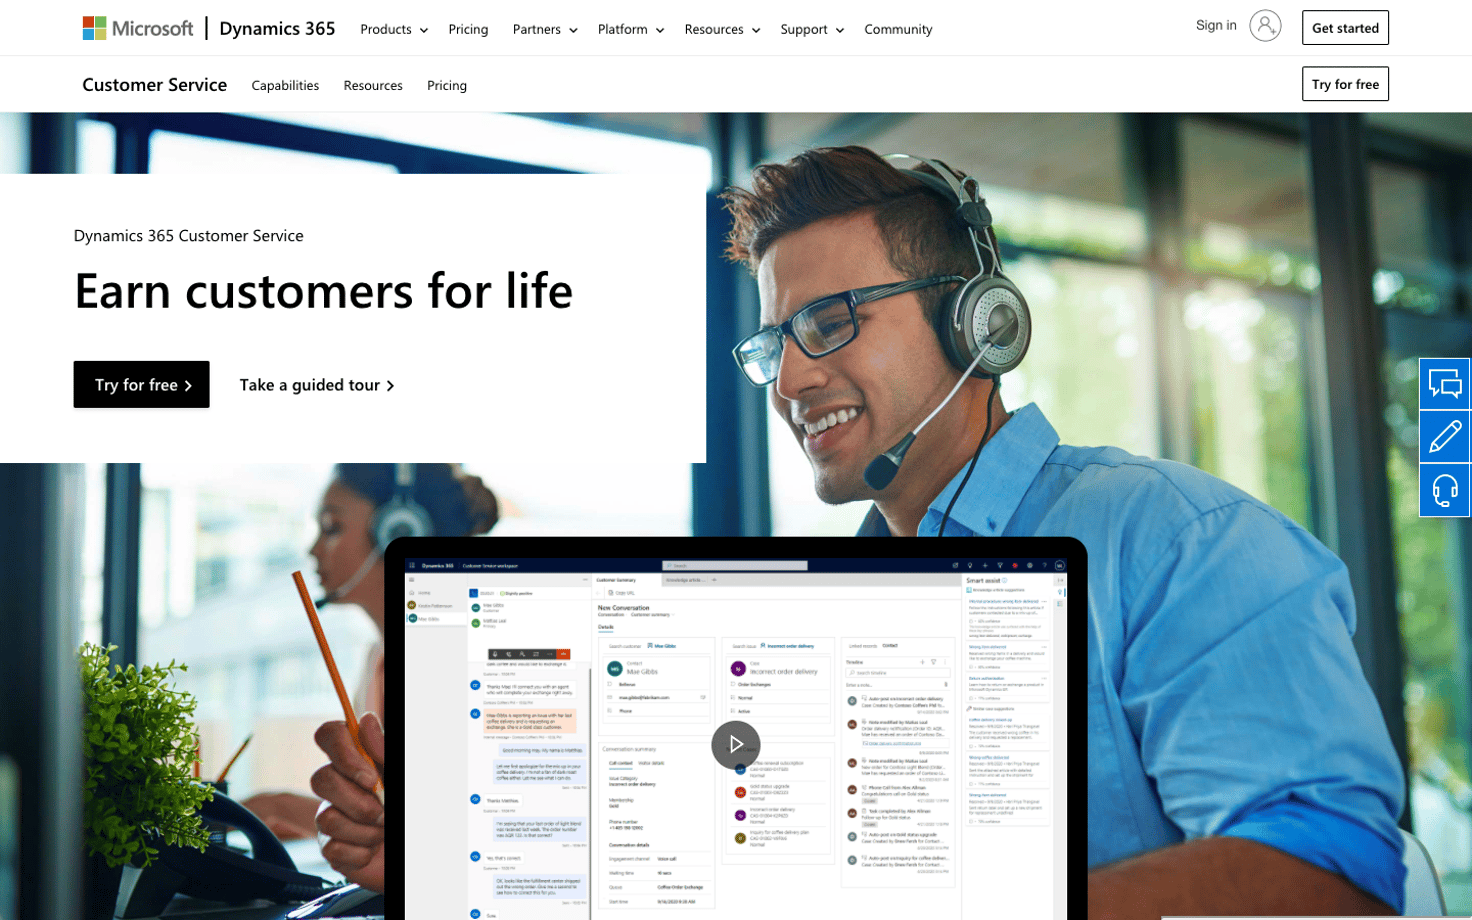 Microsoft Dynamics 365 homepage: Earn customers for life